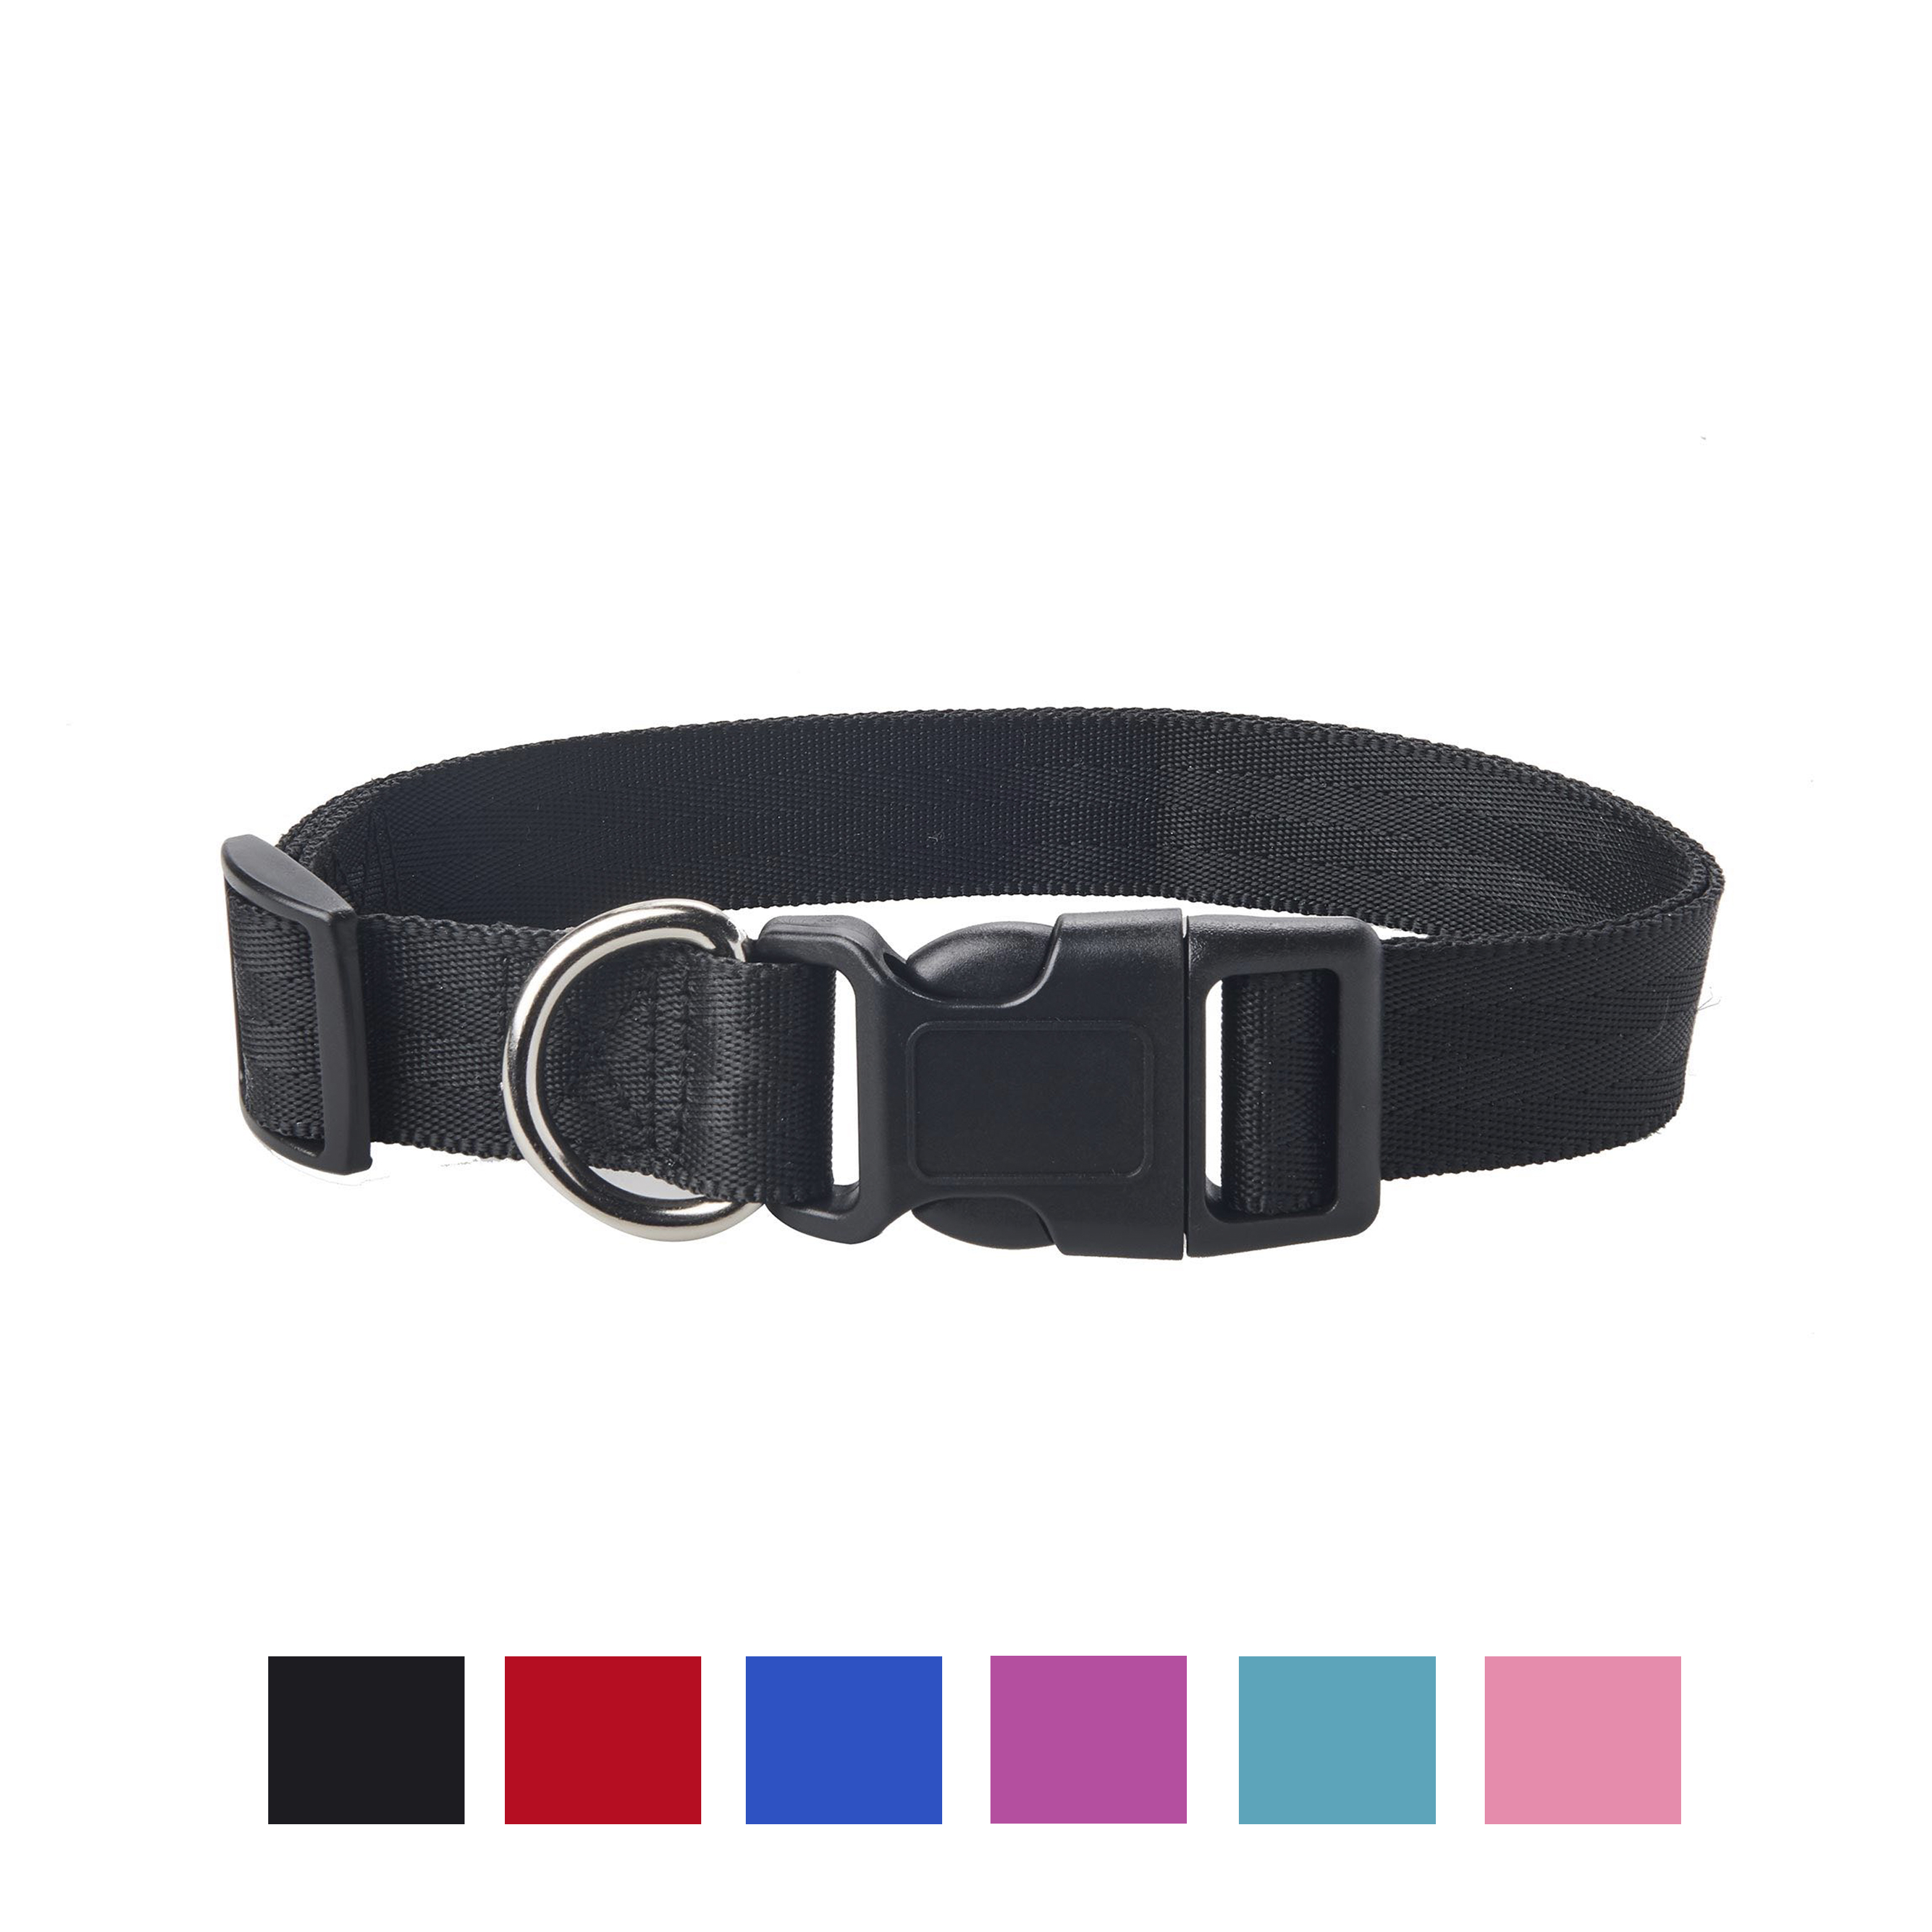 Vibrant Life Reflective Polyester Adjustable Dog Collar, Black, Large - image 2 of 5